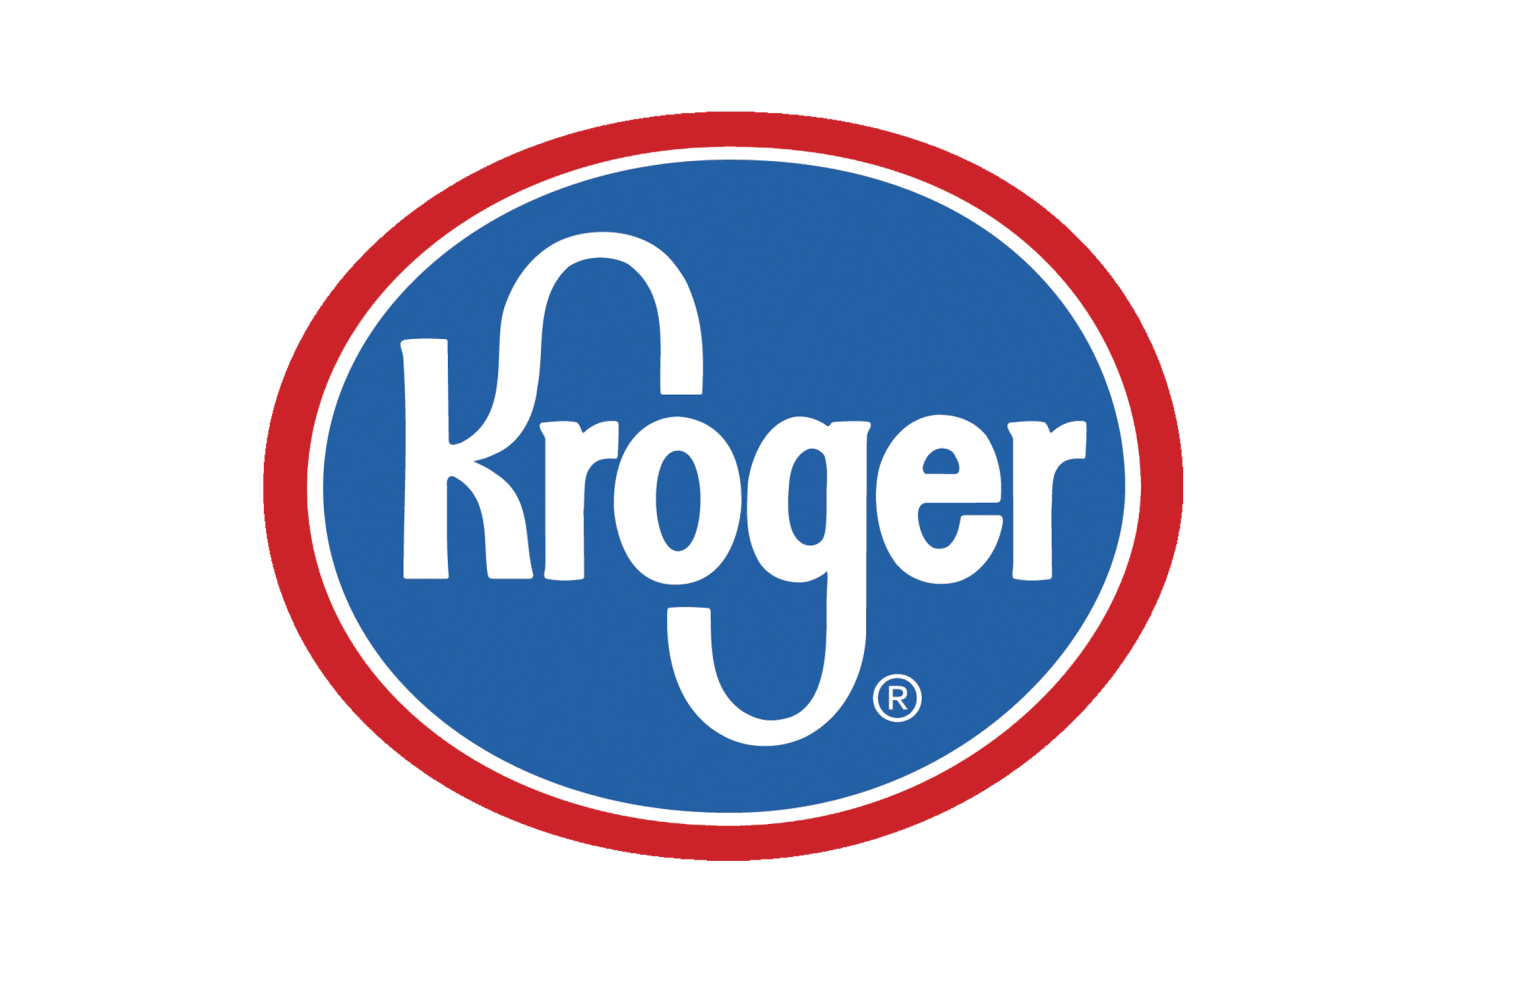 Kroger